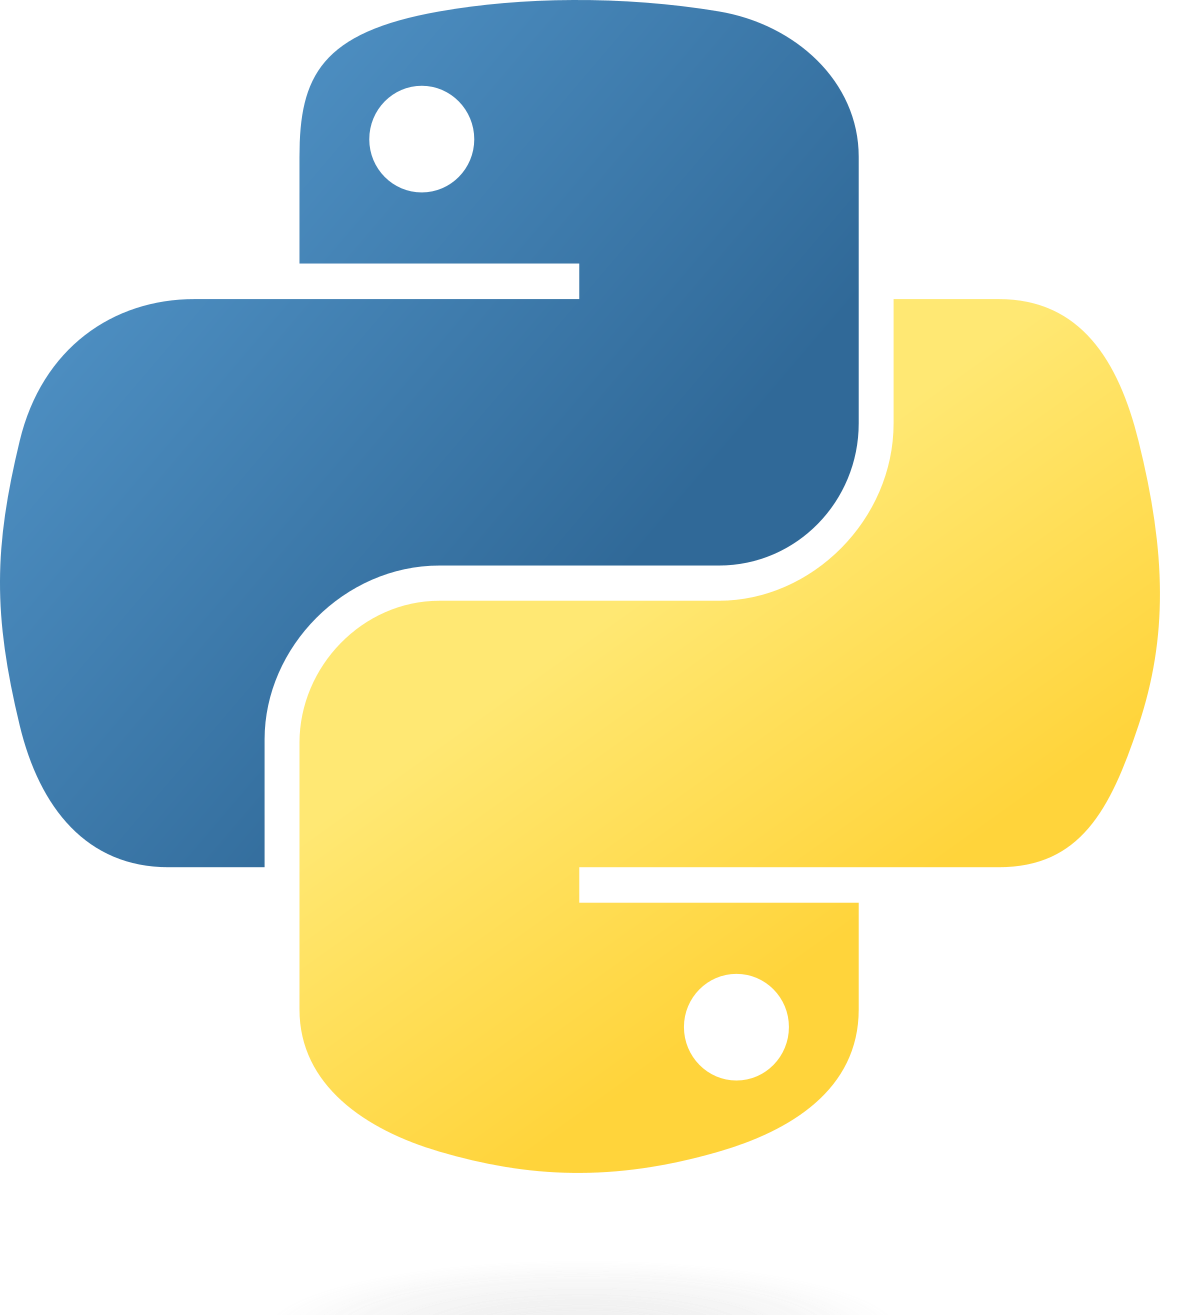 Historia de Python - Wikipedia, la enciclopedia libre